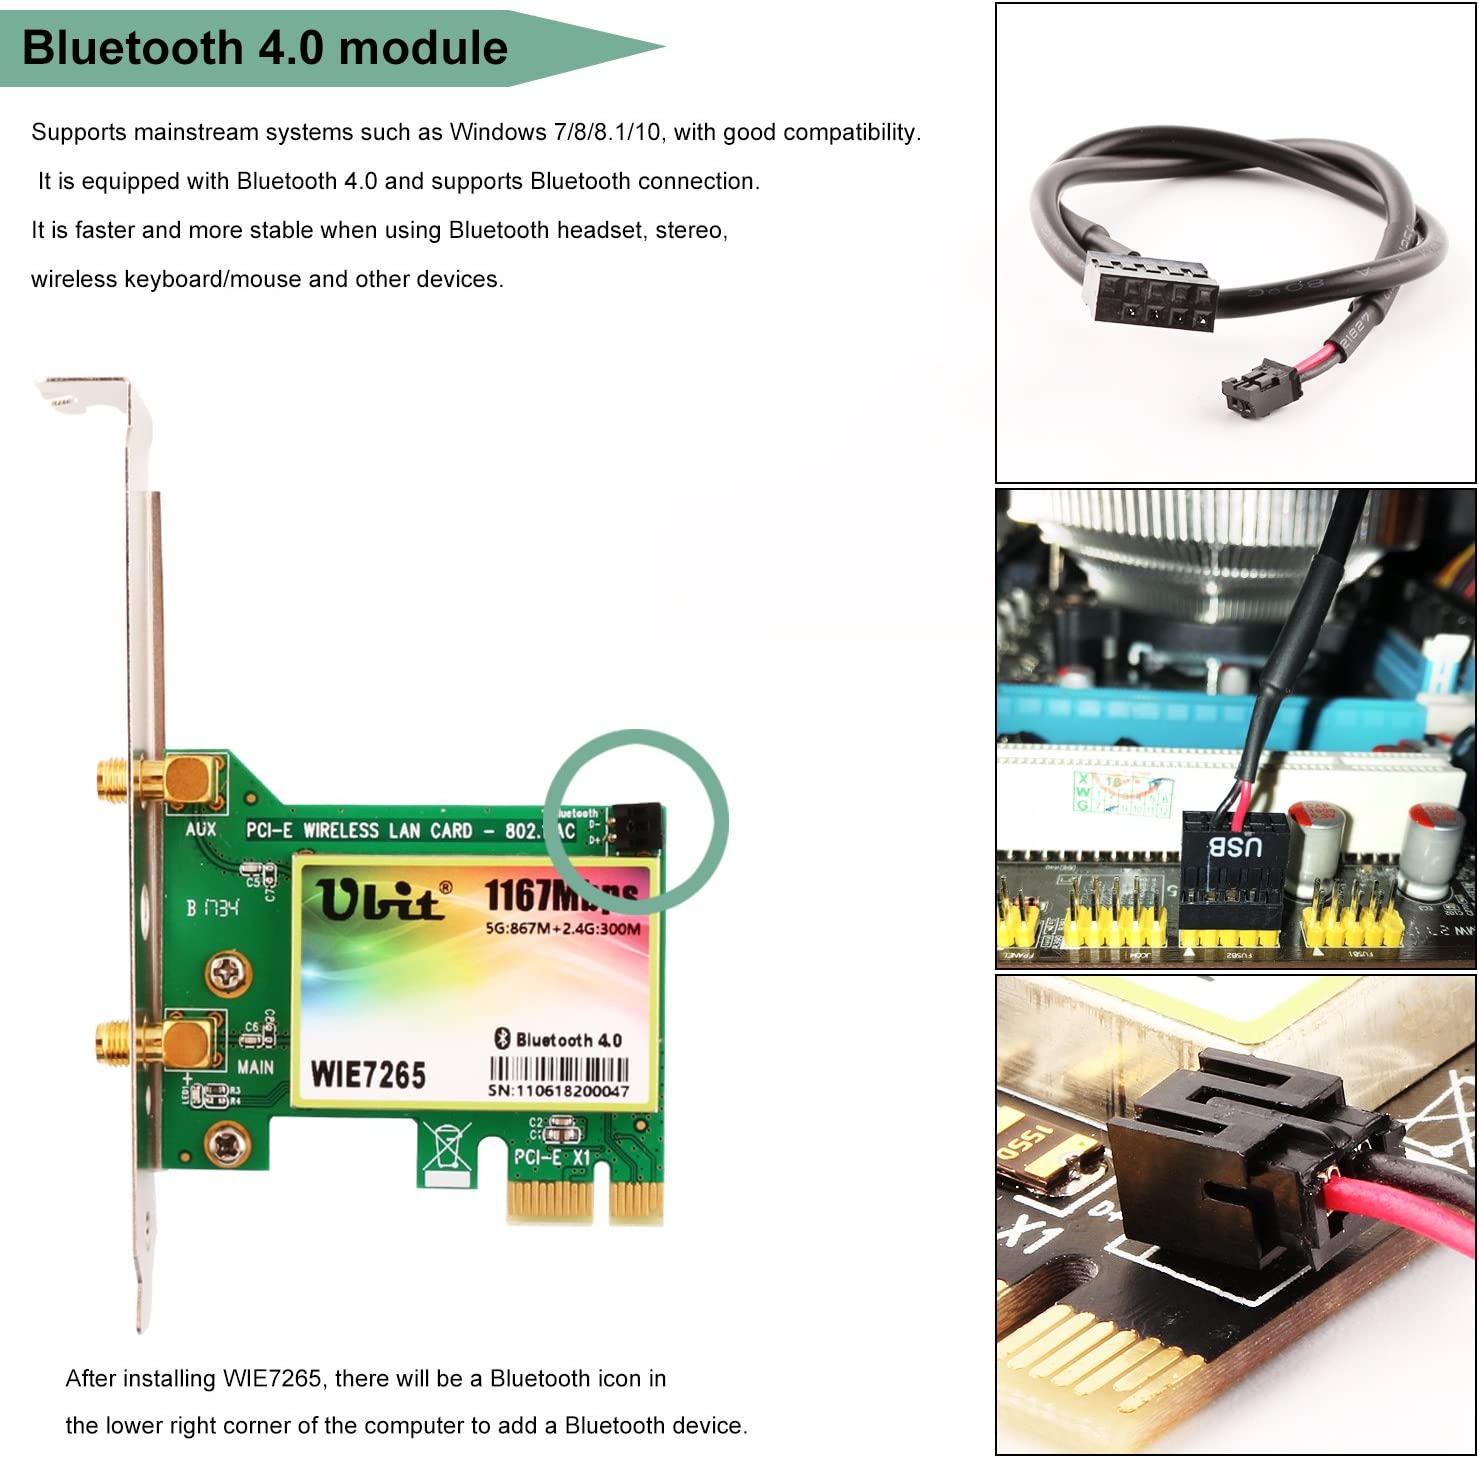 Wireless Network Card, Ubit Wireless WiFi Dual Band Gigabit Adapter (LNC)